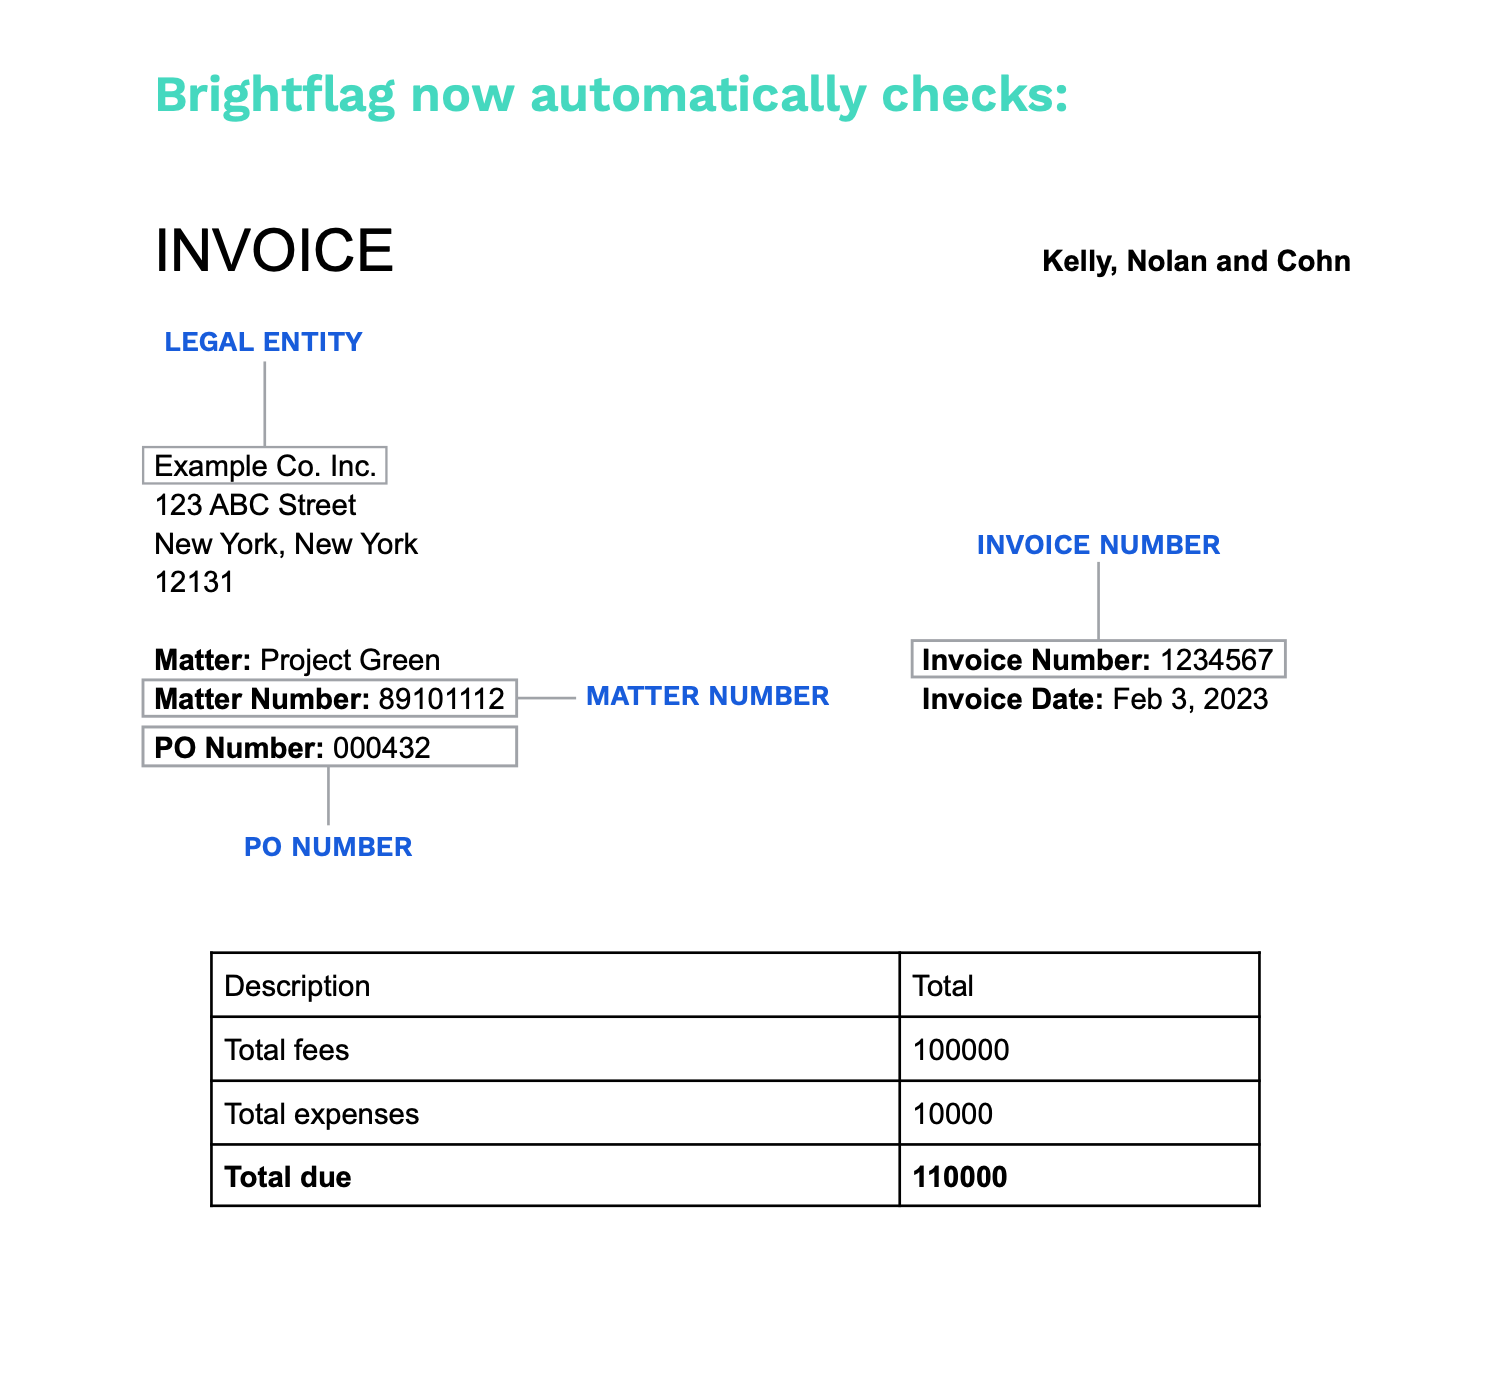 Sample PDF invoice; image courtesy of Brightflag.